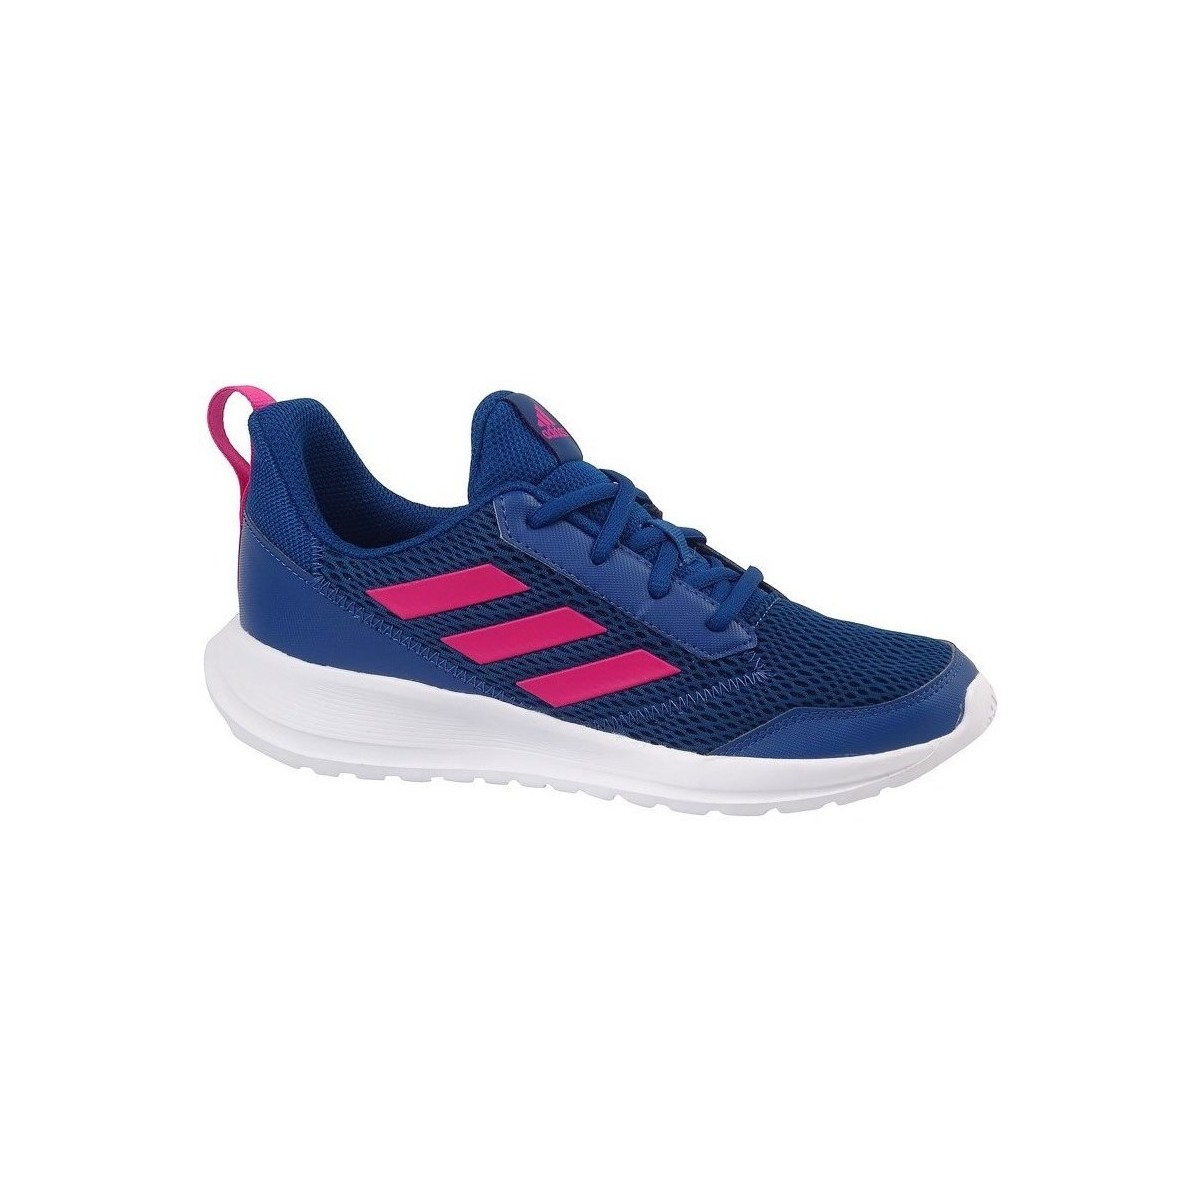 Shoes Children Low top trainers adidas Originals Altarun K Pink, Navy blue